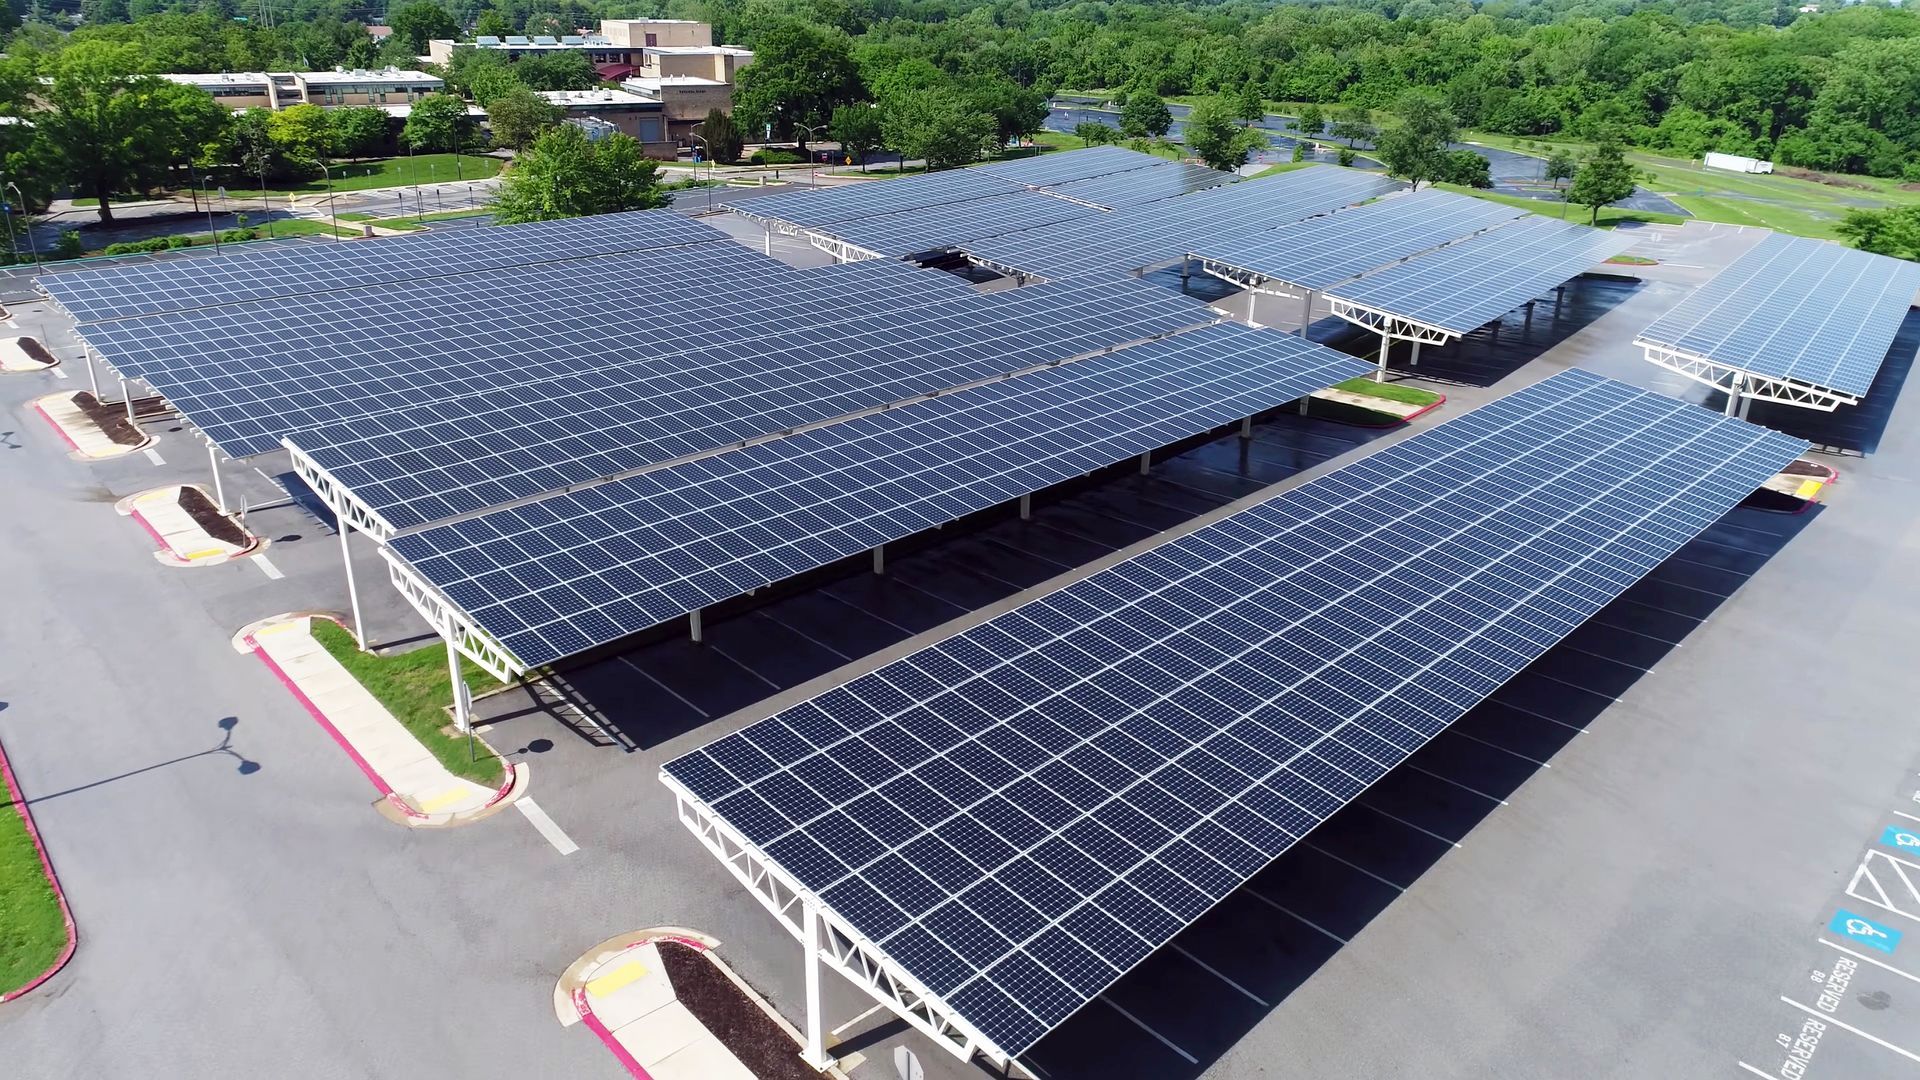 Solar panels on parking lot